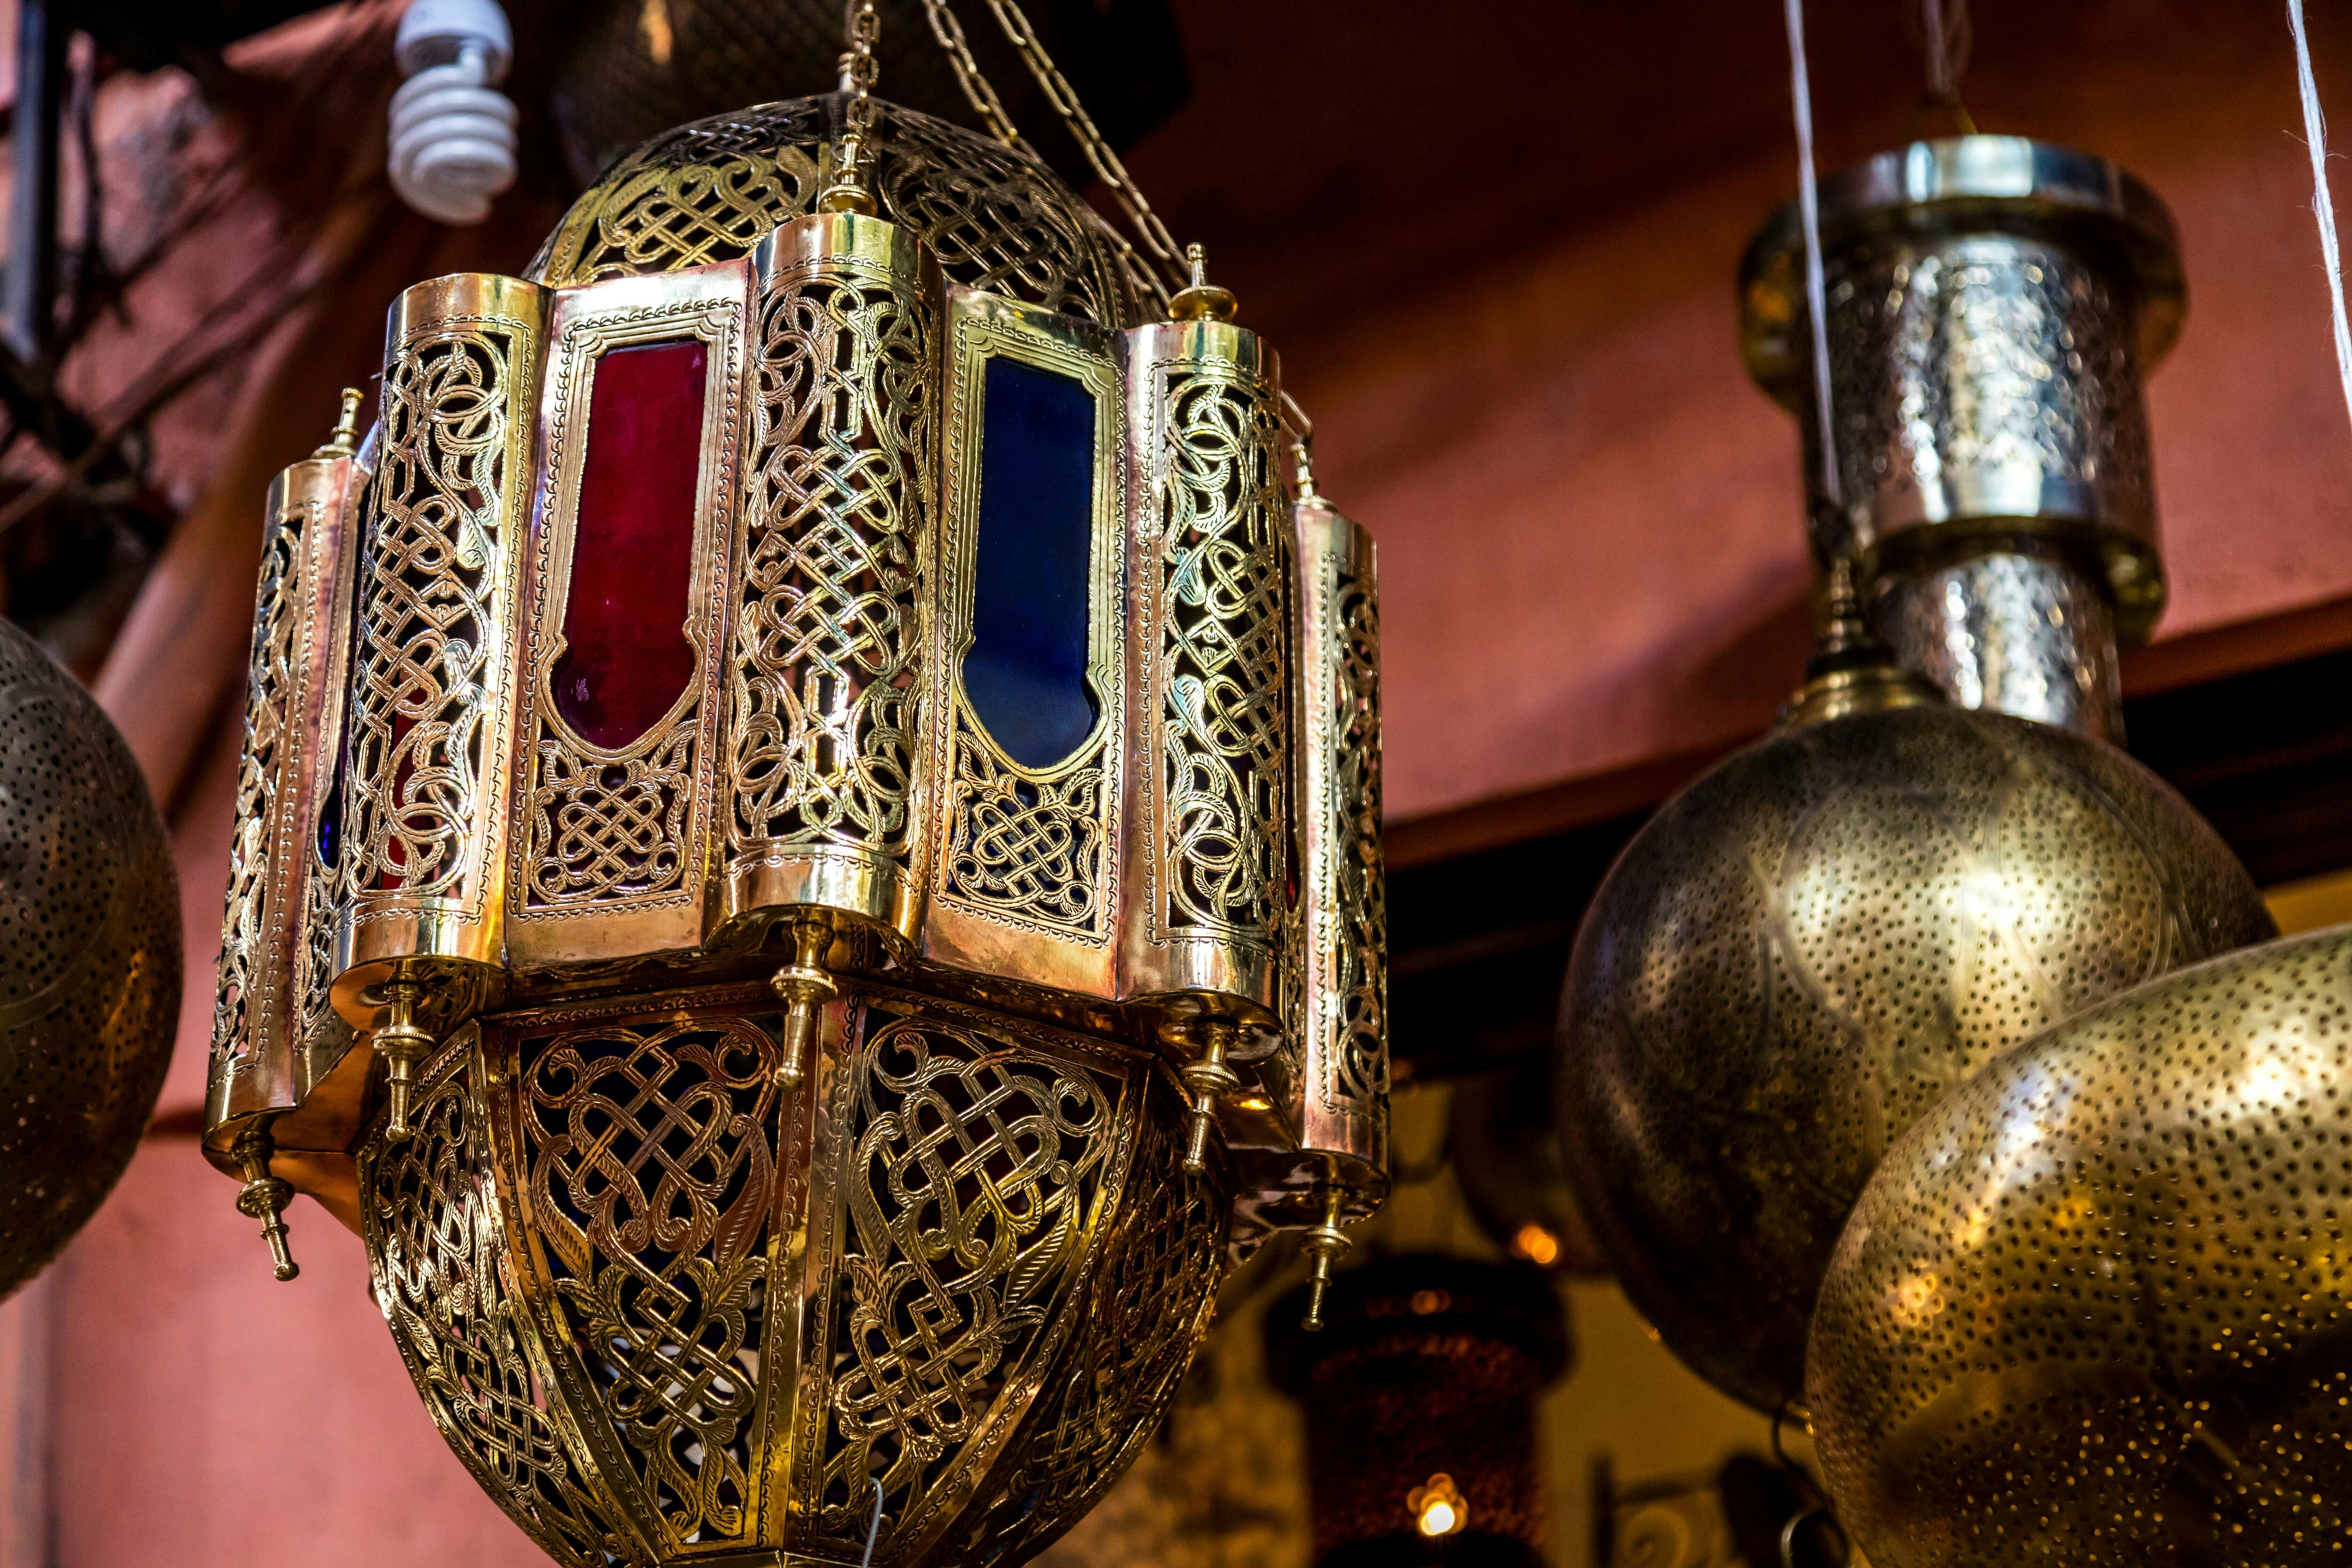 Marrakech Medina & Souks Private Tour